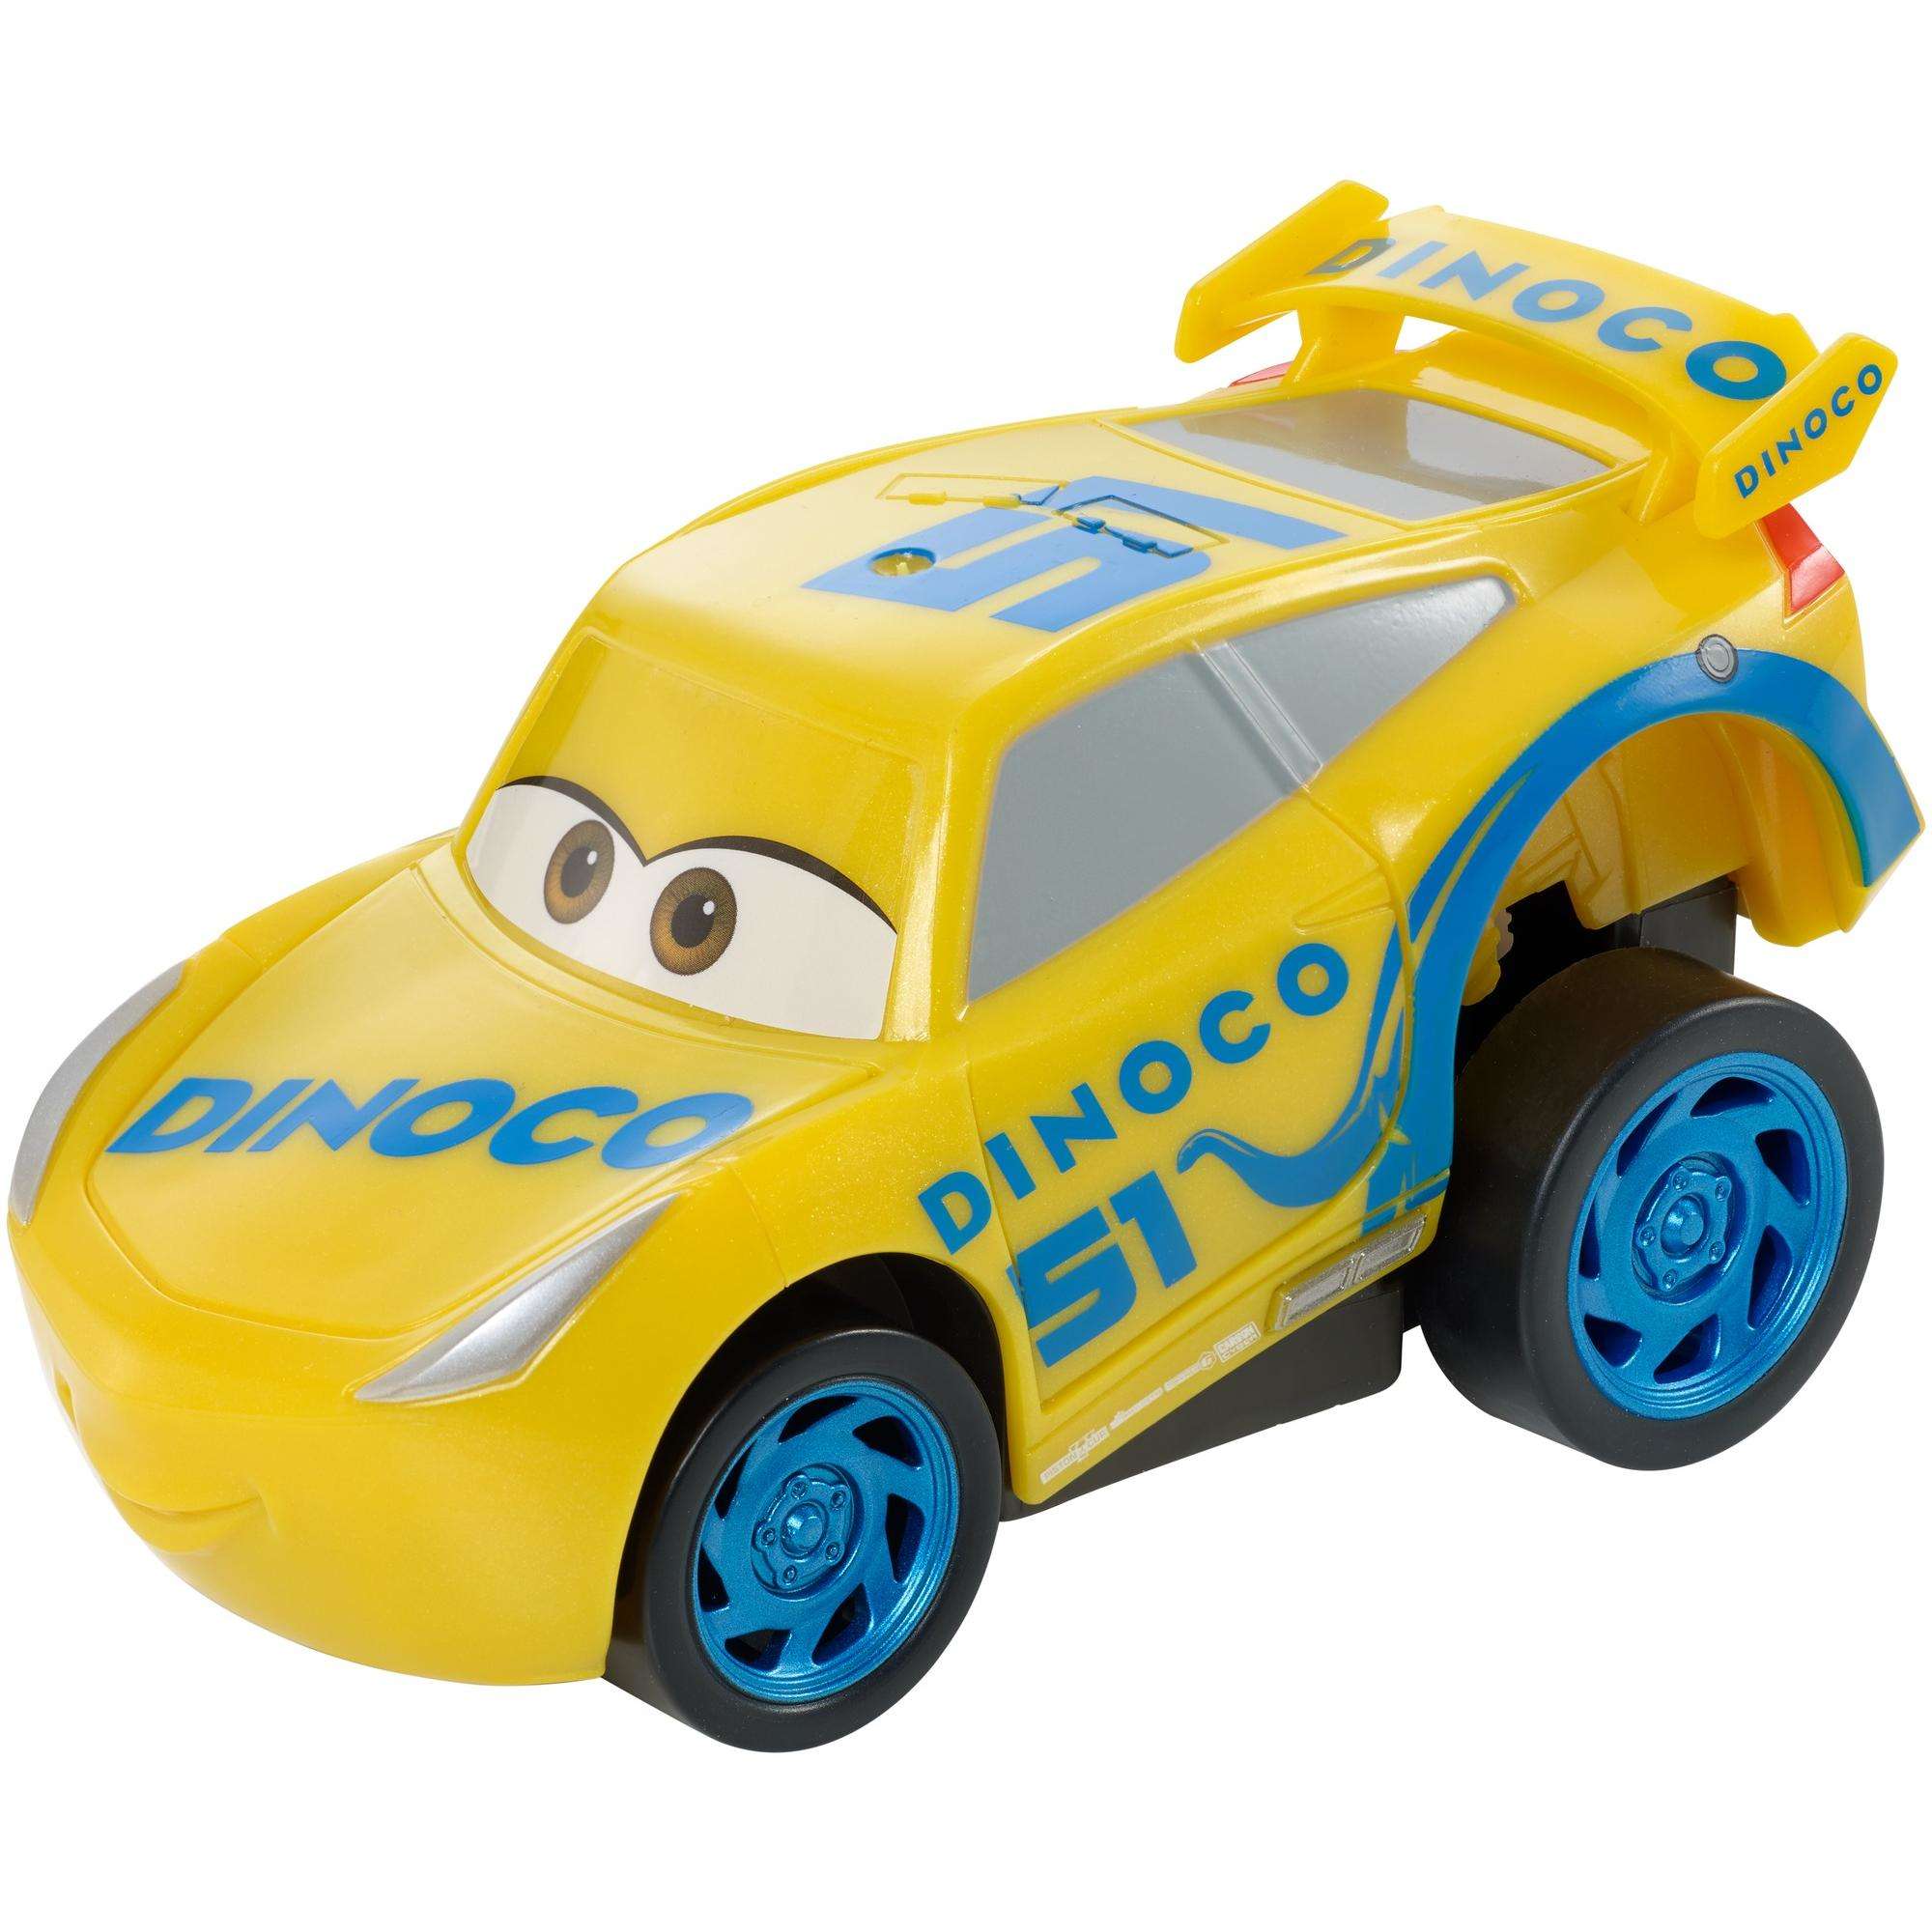 20065011 Dinoco Cruz Disney-Pixar Cars 